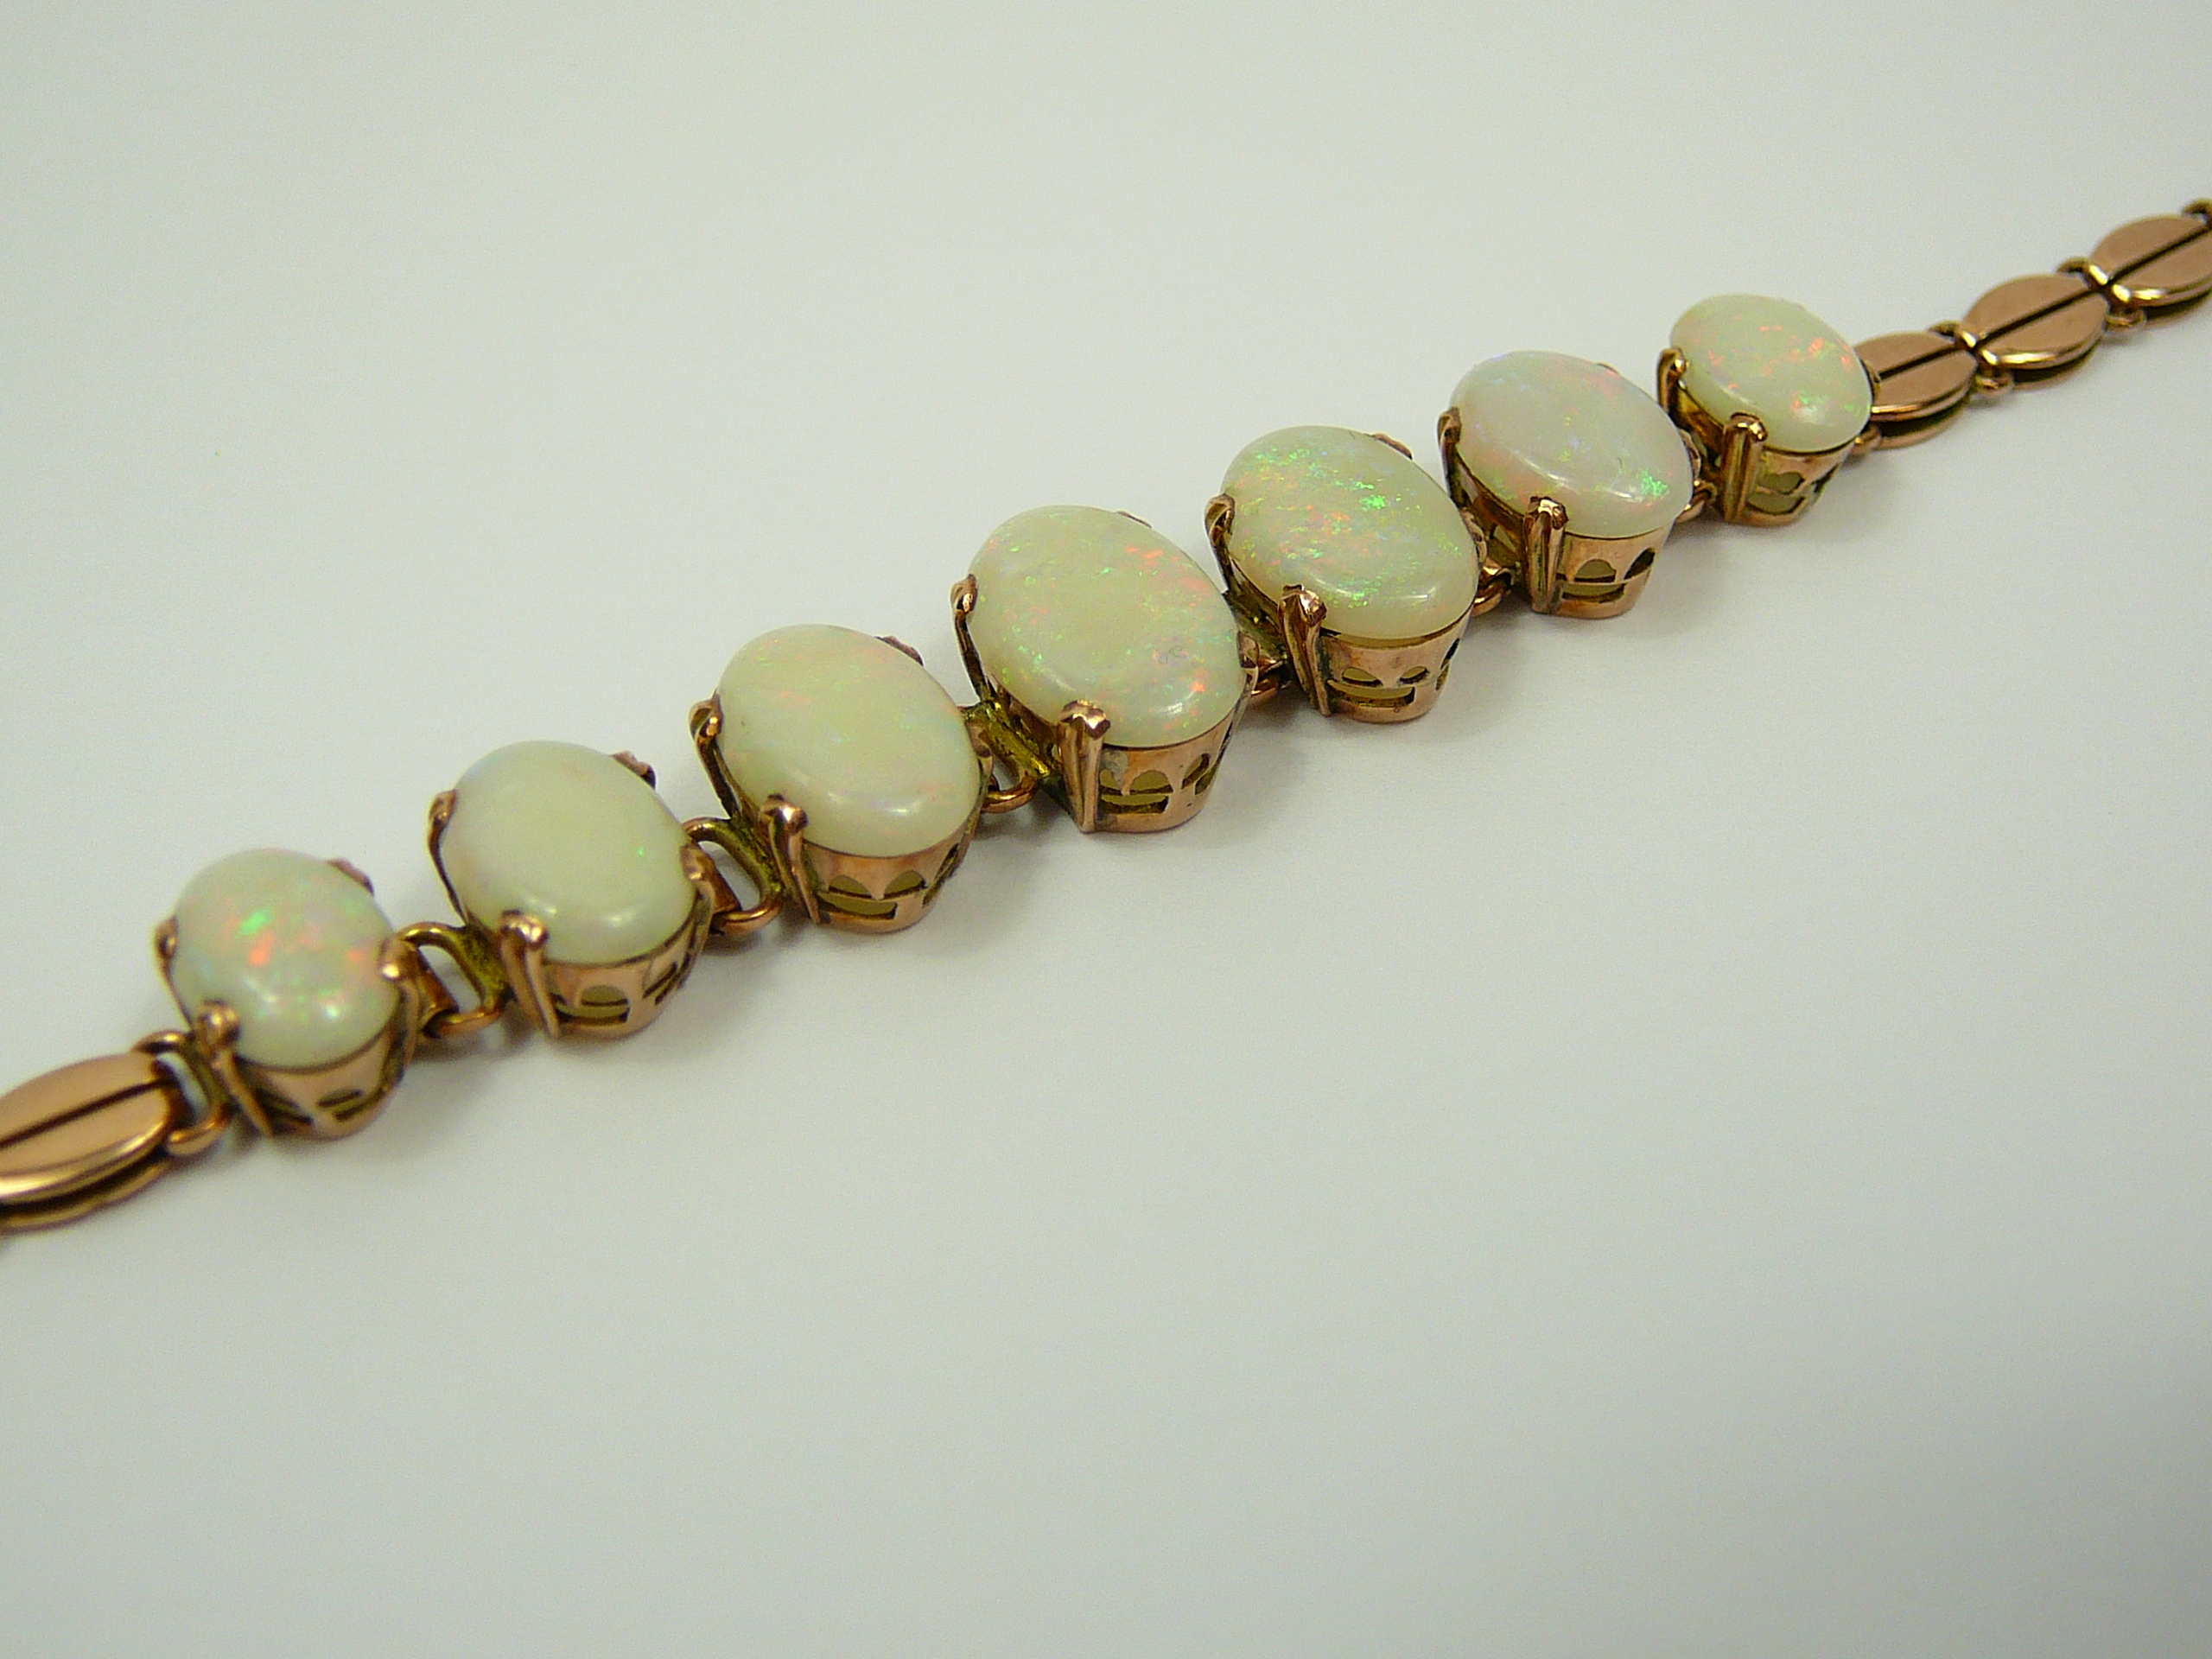 14ct rose gold and opal bracelet - Image 2 of 3